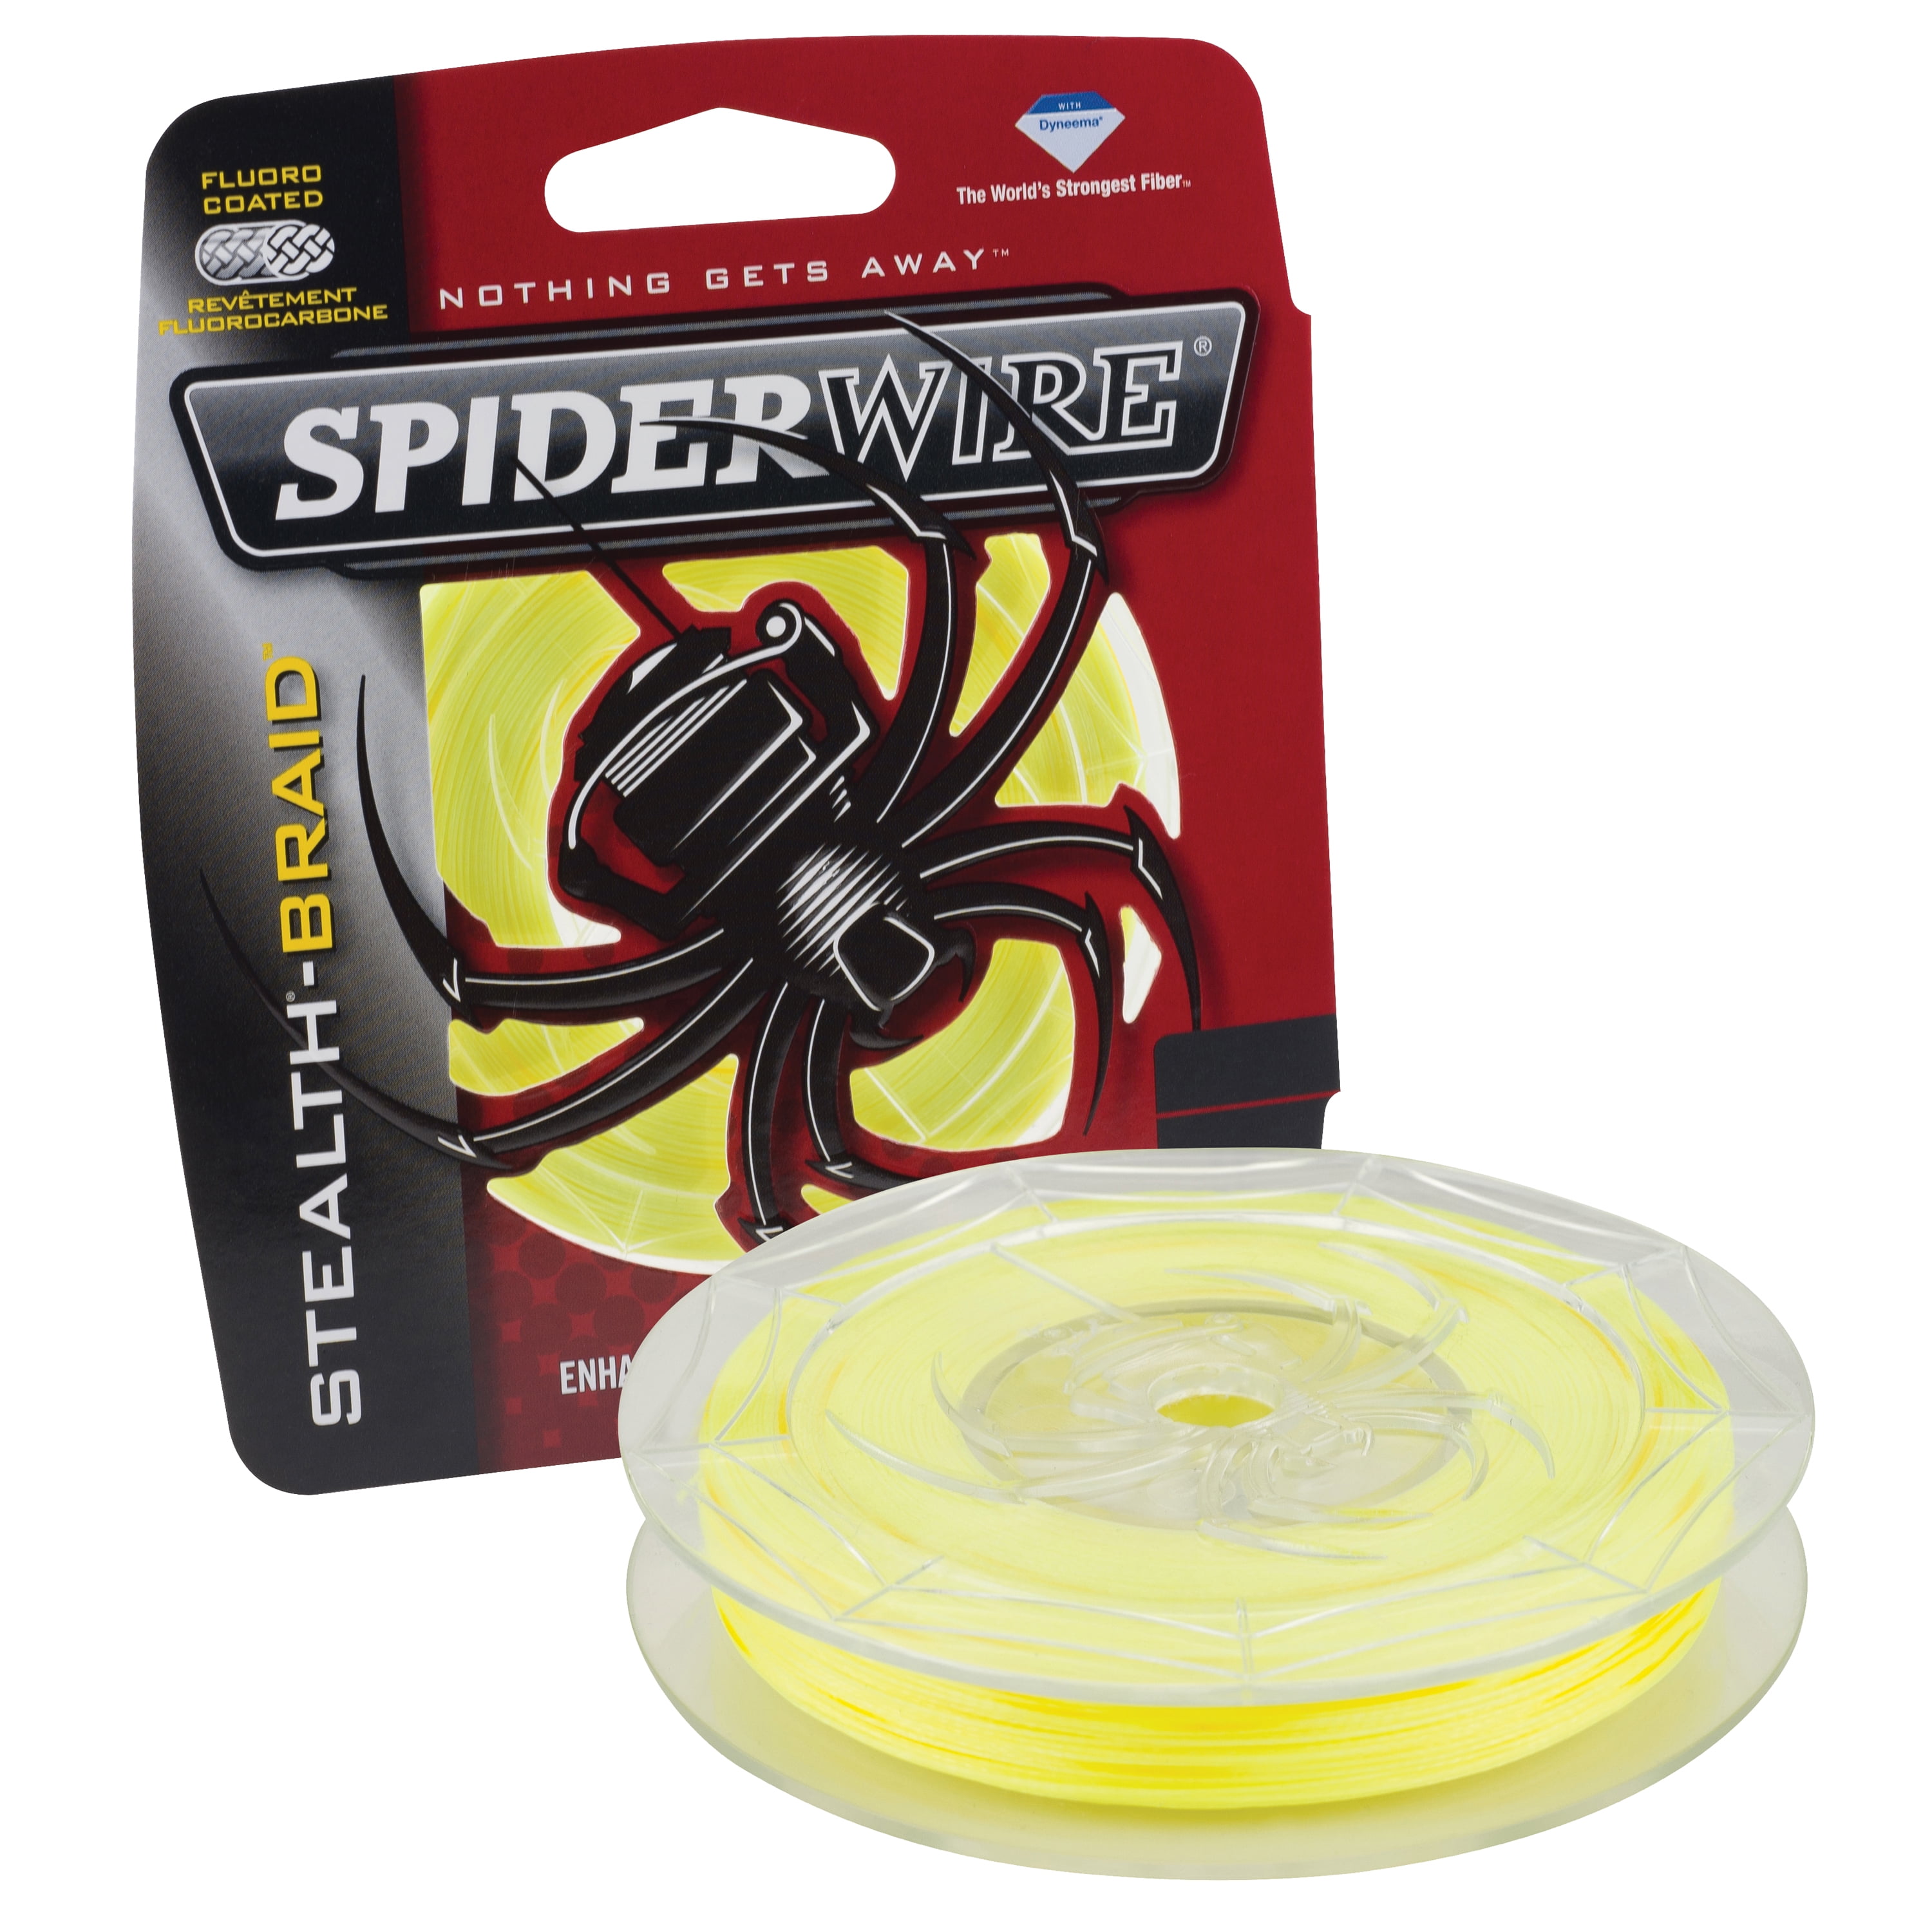 Spiderwire Stealth Translucent Braid Fishing Line 65 # 300 Yards Fluoro Coat 